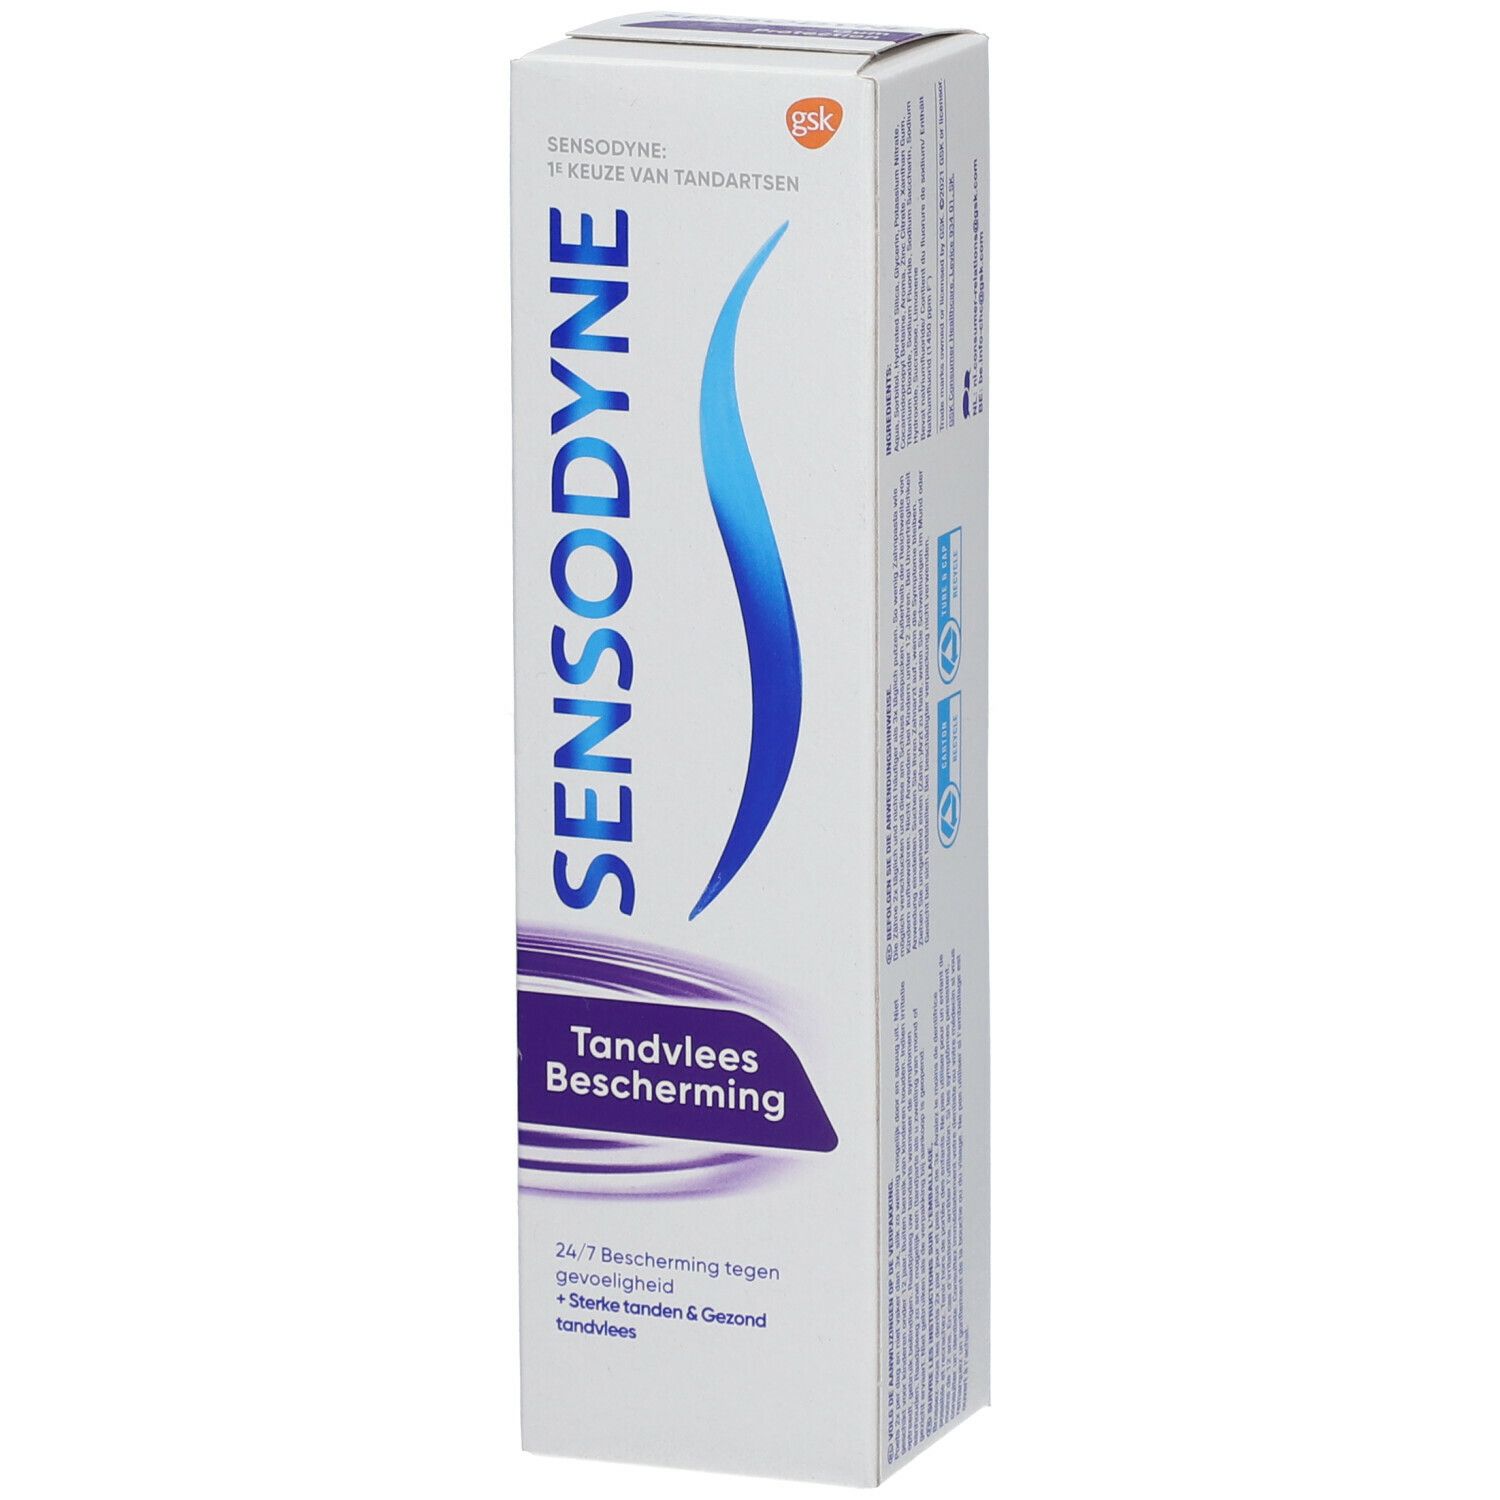 Sensodyne Gum Protection Dentifrice